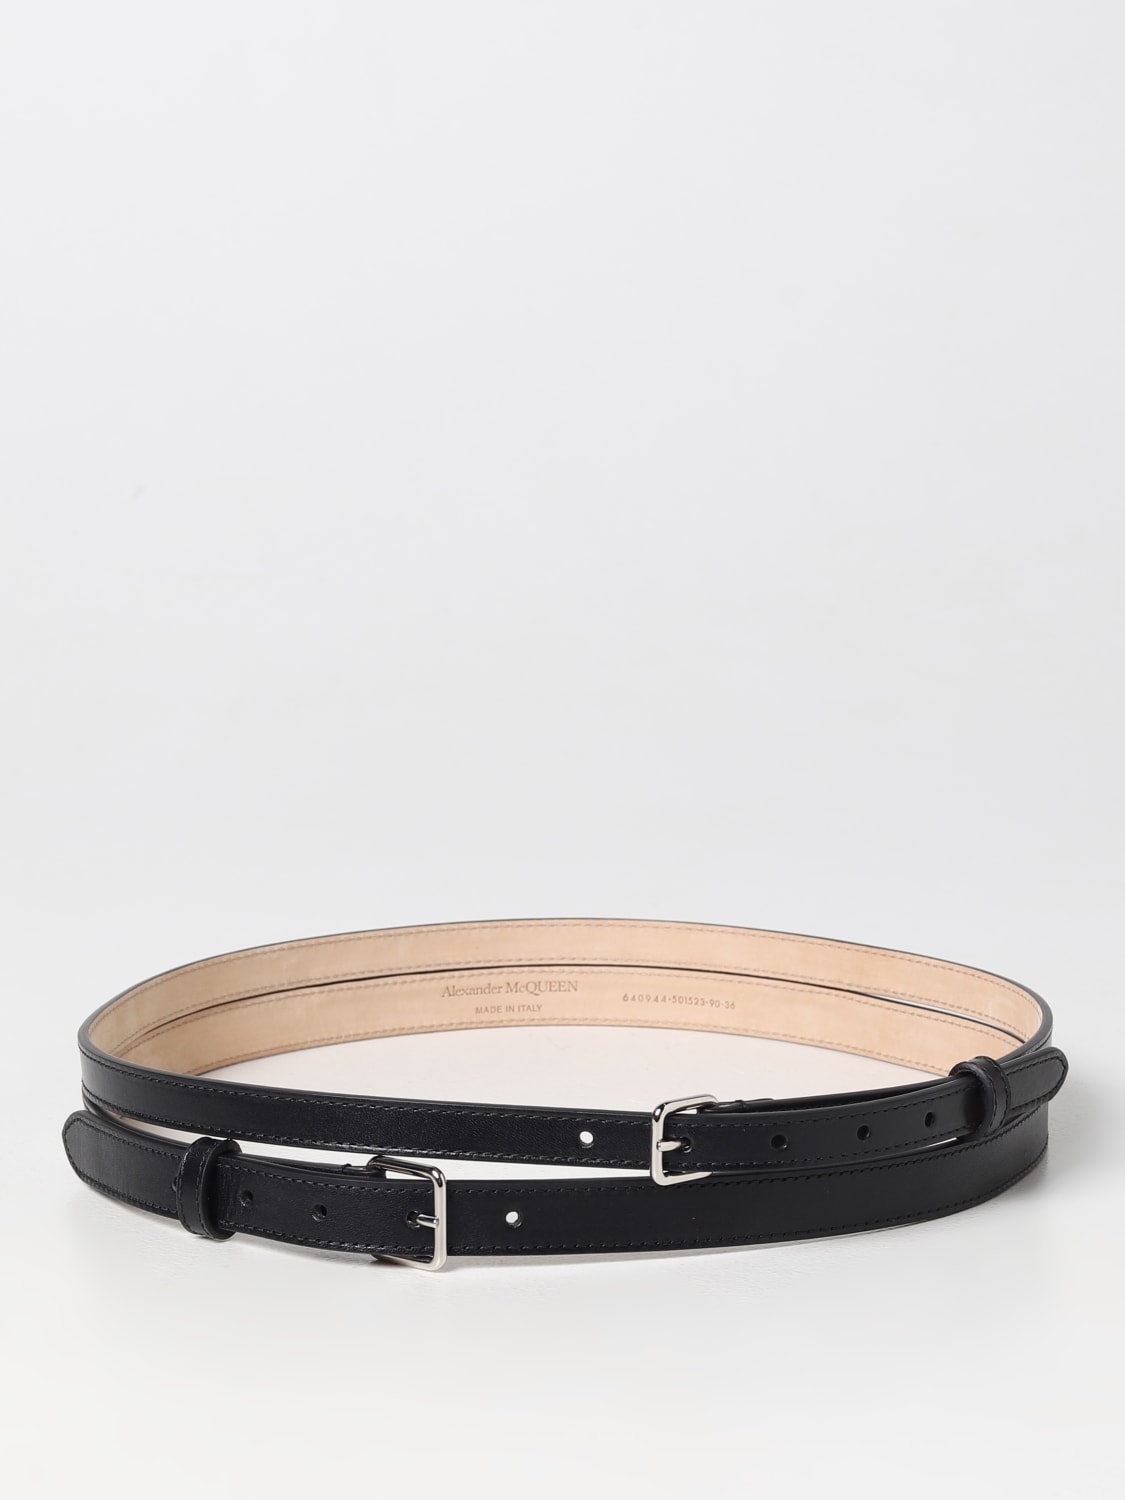 Alexander McQueen smooth leather belt - Black